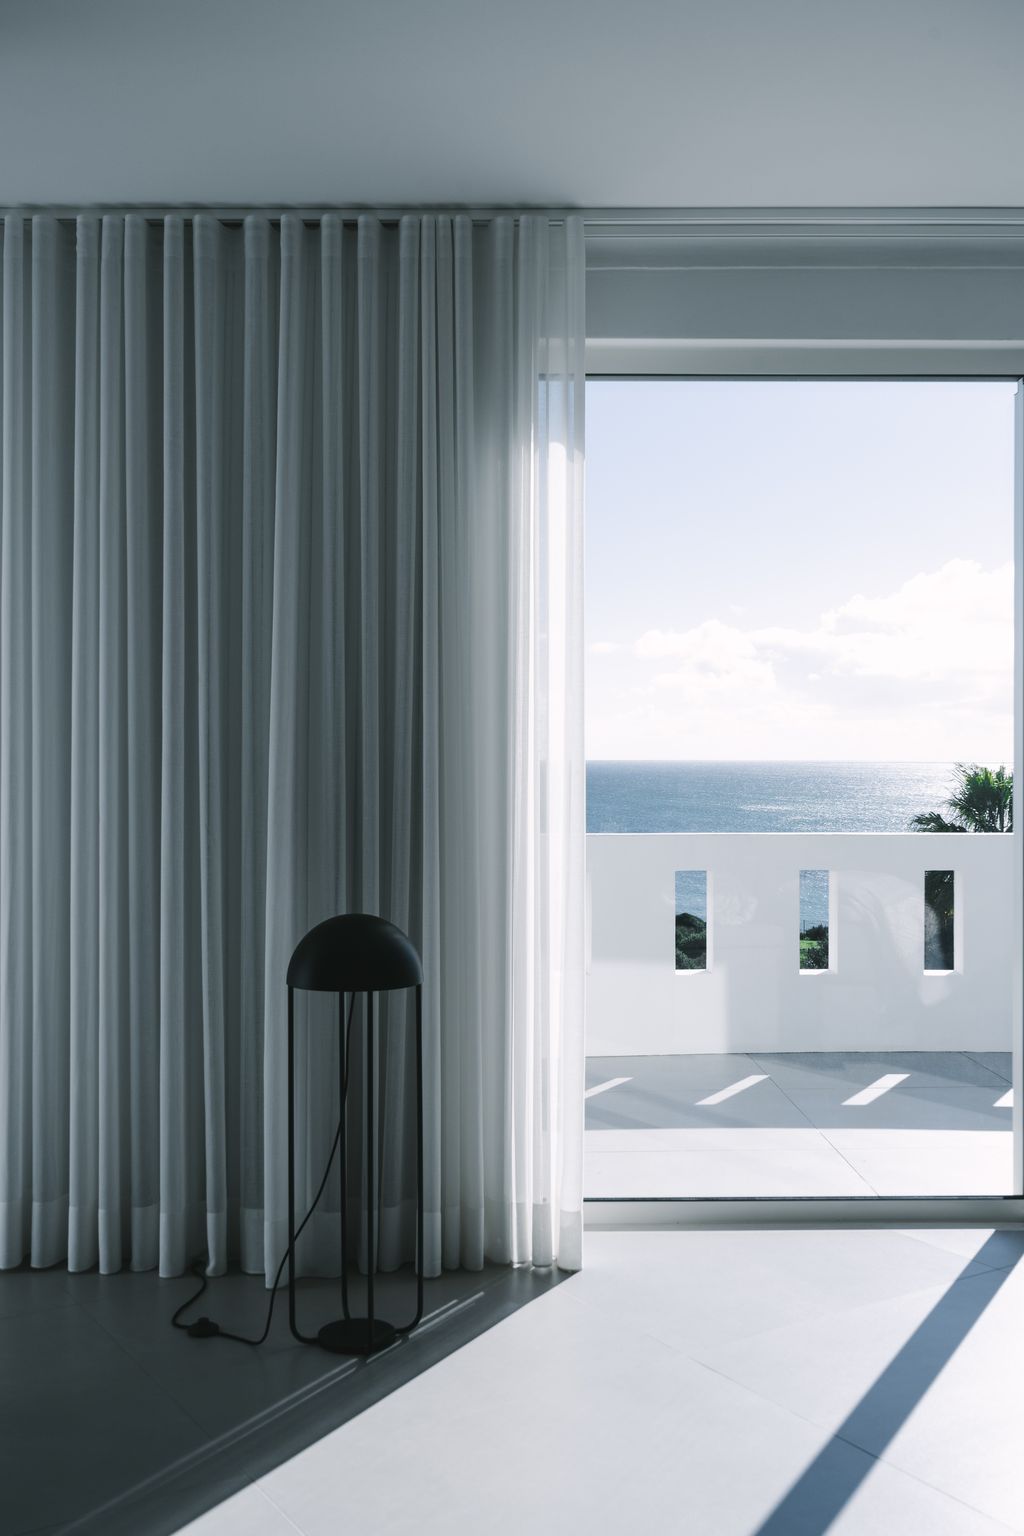 Stunning Villa Calle with Incredible Sea Views in Algarve by Studio Arte